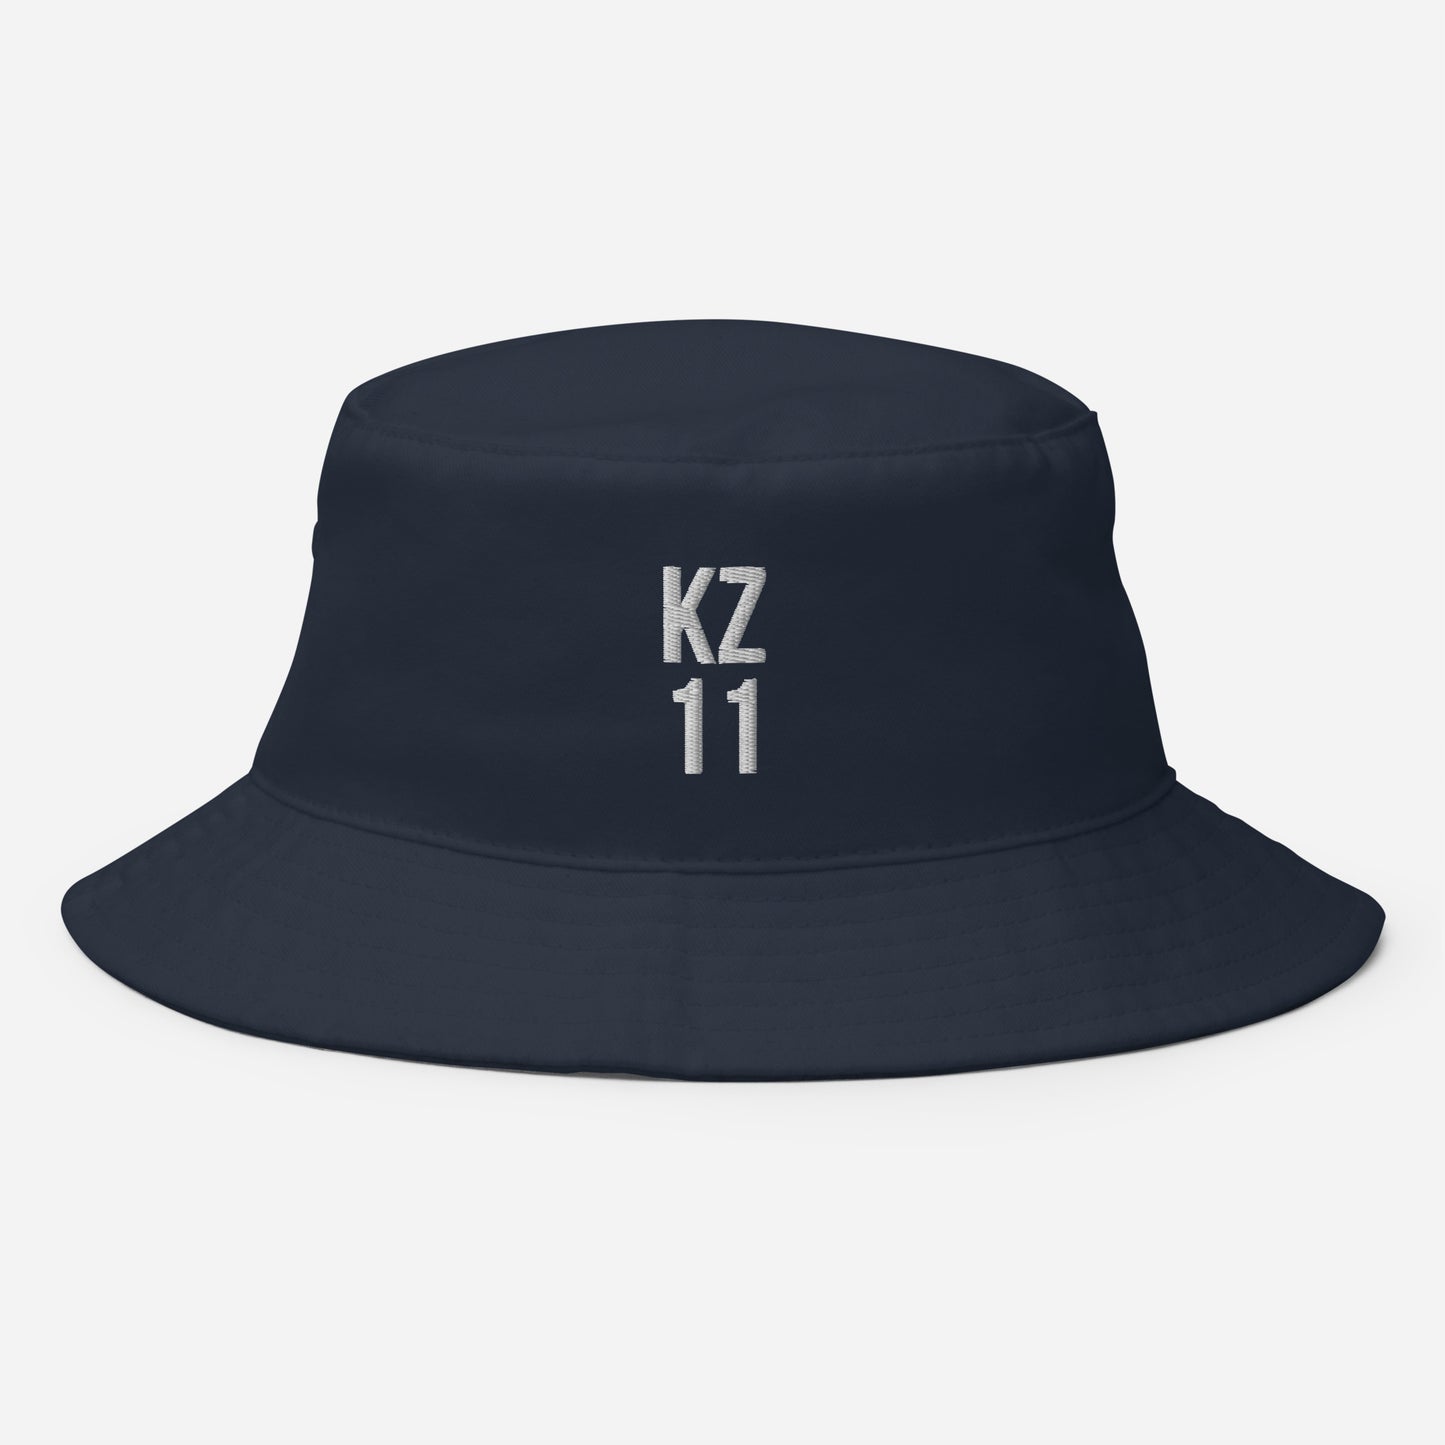 KZ 11 Bucket Hat